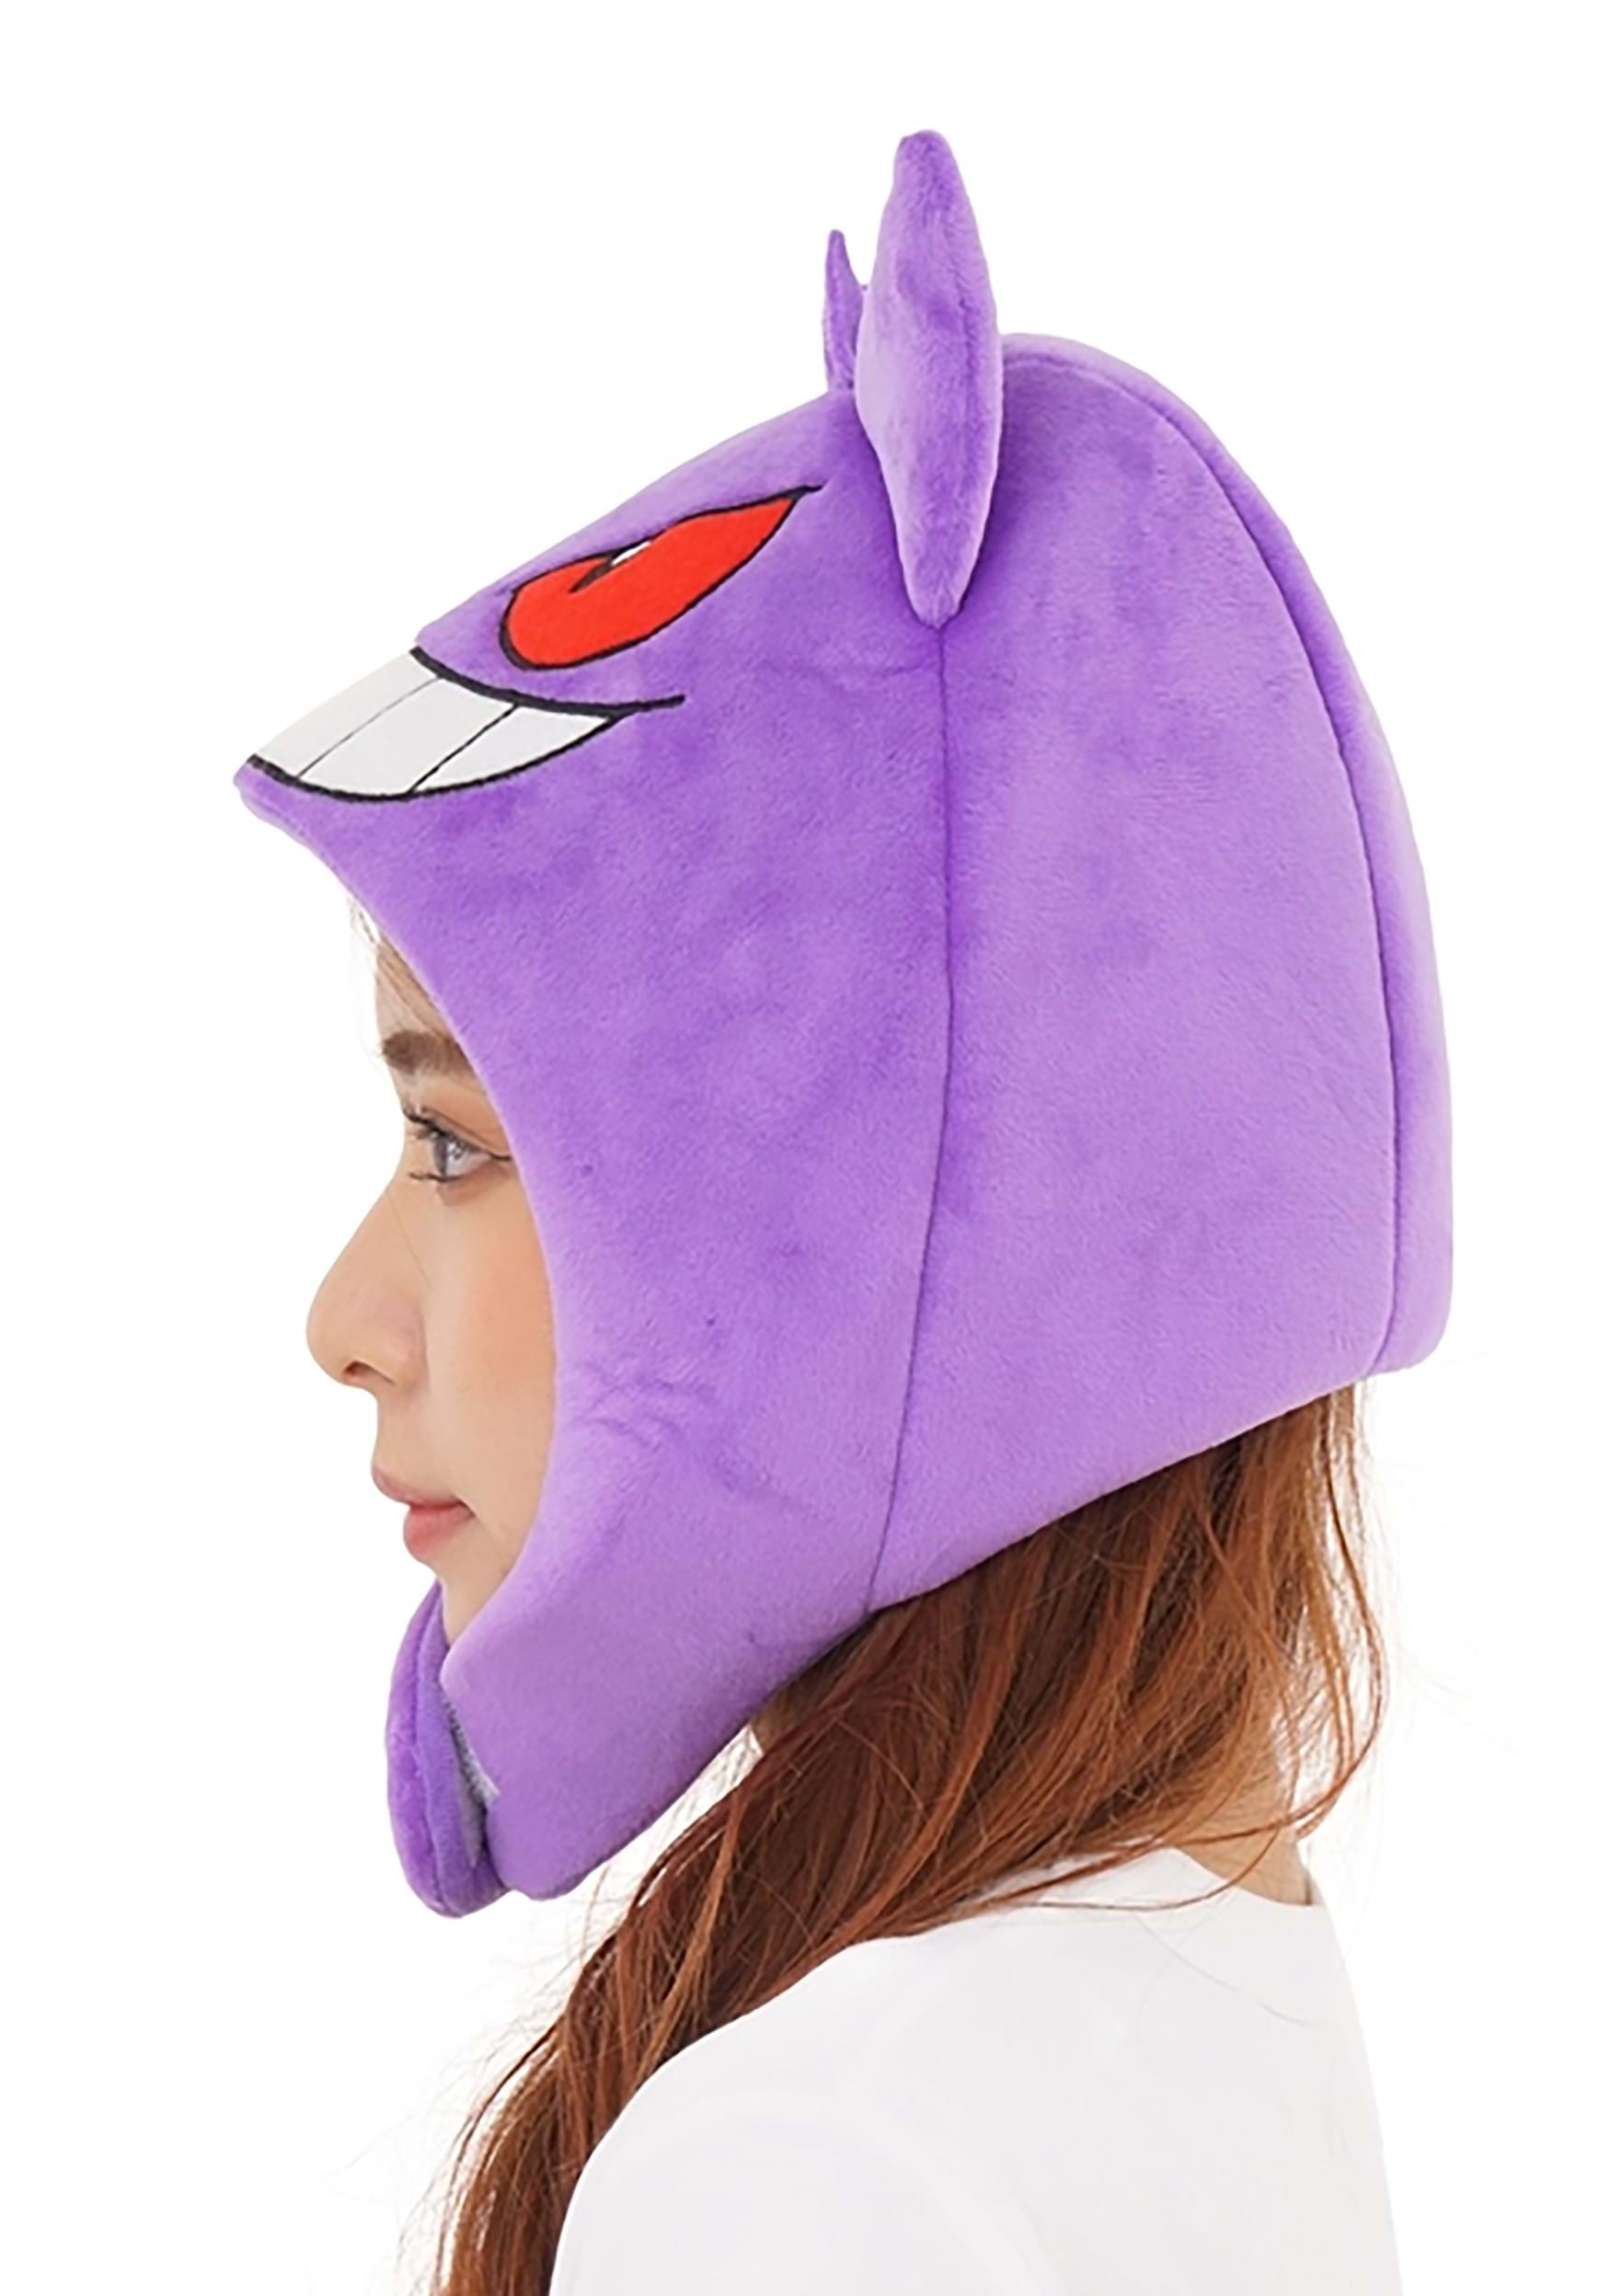 Gengar Pokemon Adult Headpiece